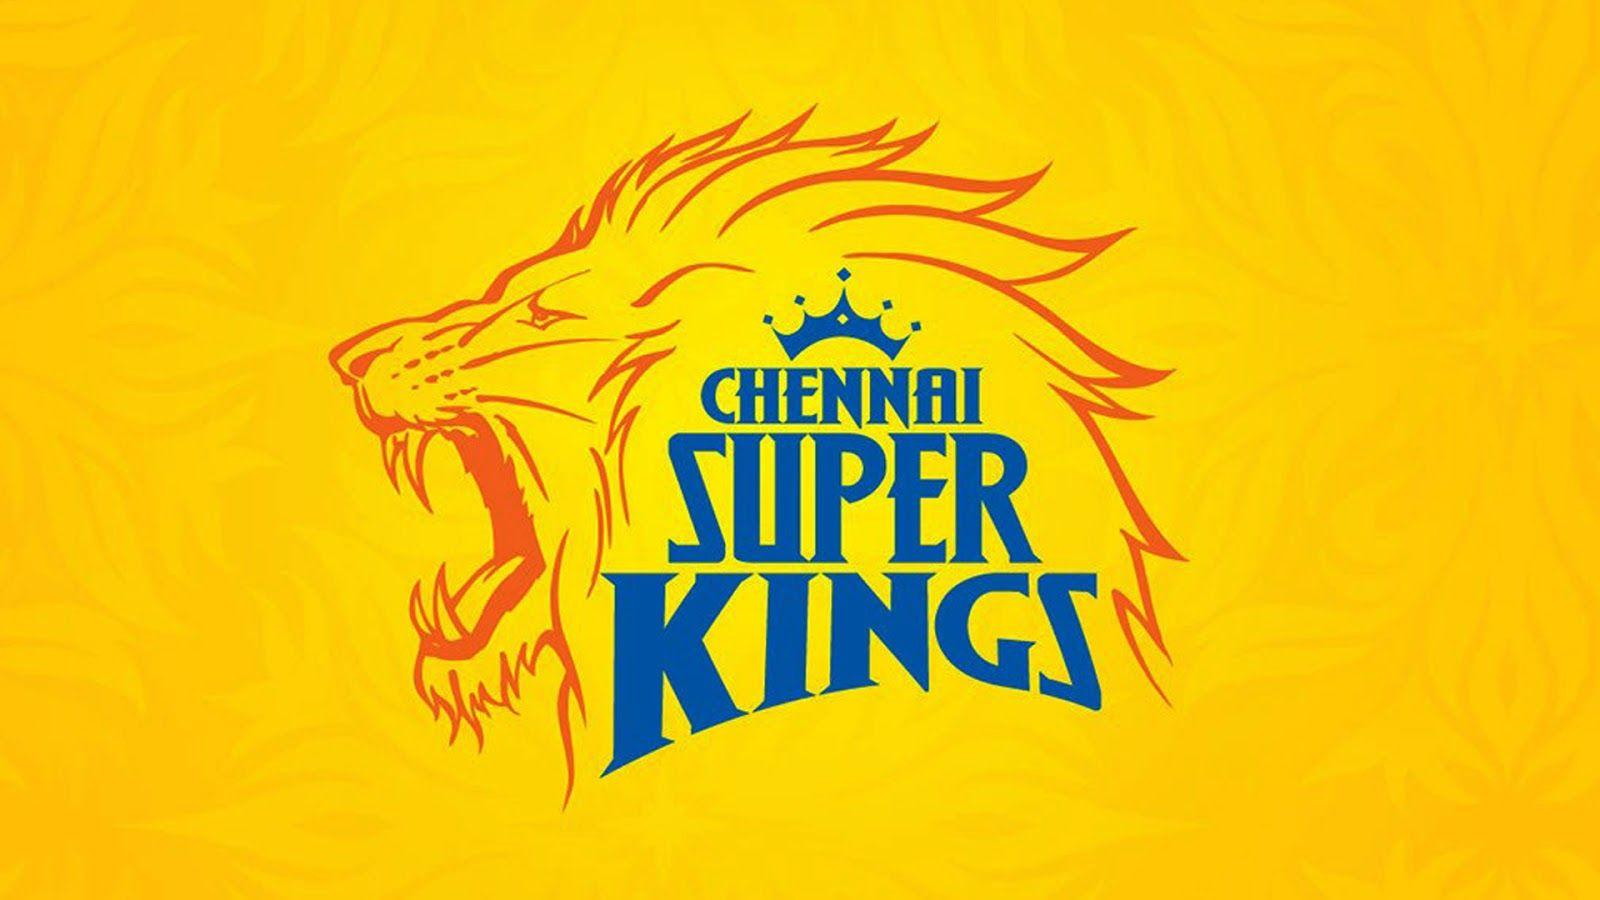 Chennai Super Kings HD Wallpaper Download Free 1080p. Chennai super kings, Chennai, Dhoni wallpaper